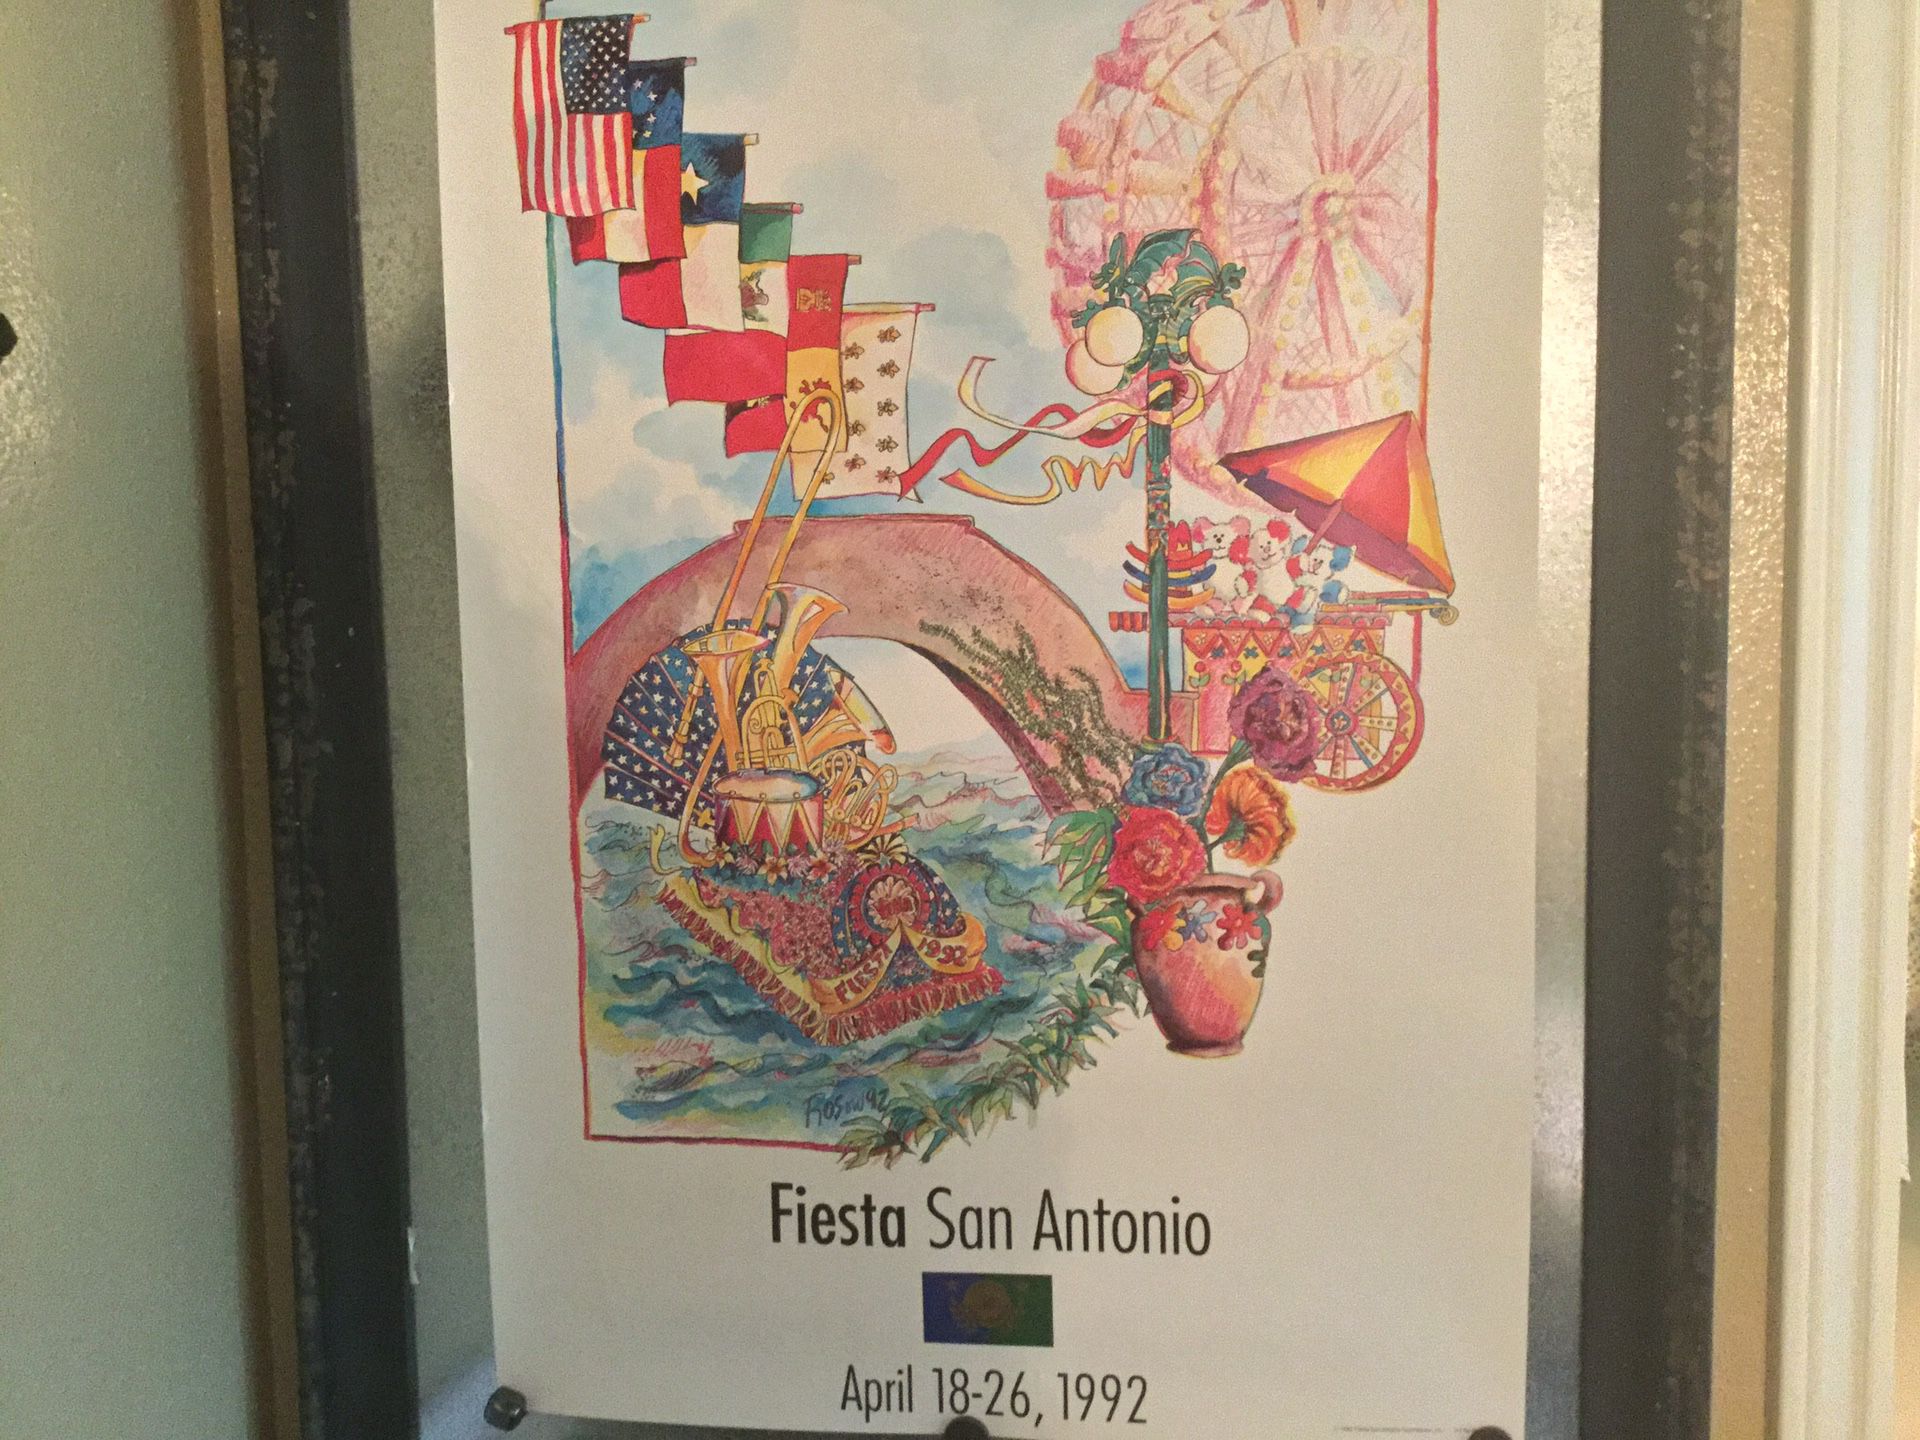 Spurs Retro Poster [DIGITAL DOWNLOADS] | Minimalist Art Print, Modern,  Vintage Style, Home | San Antonio Fiesta Colors